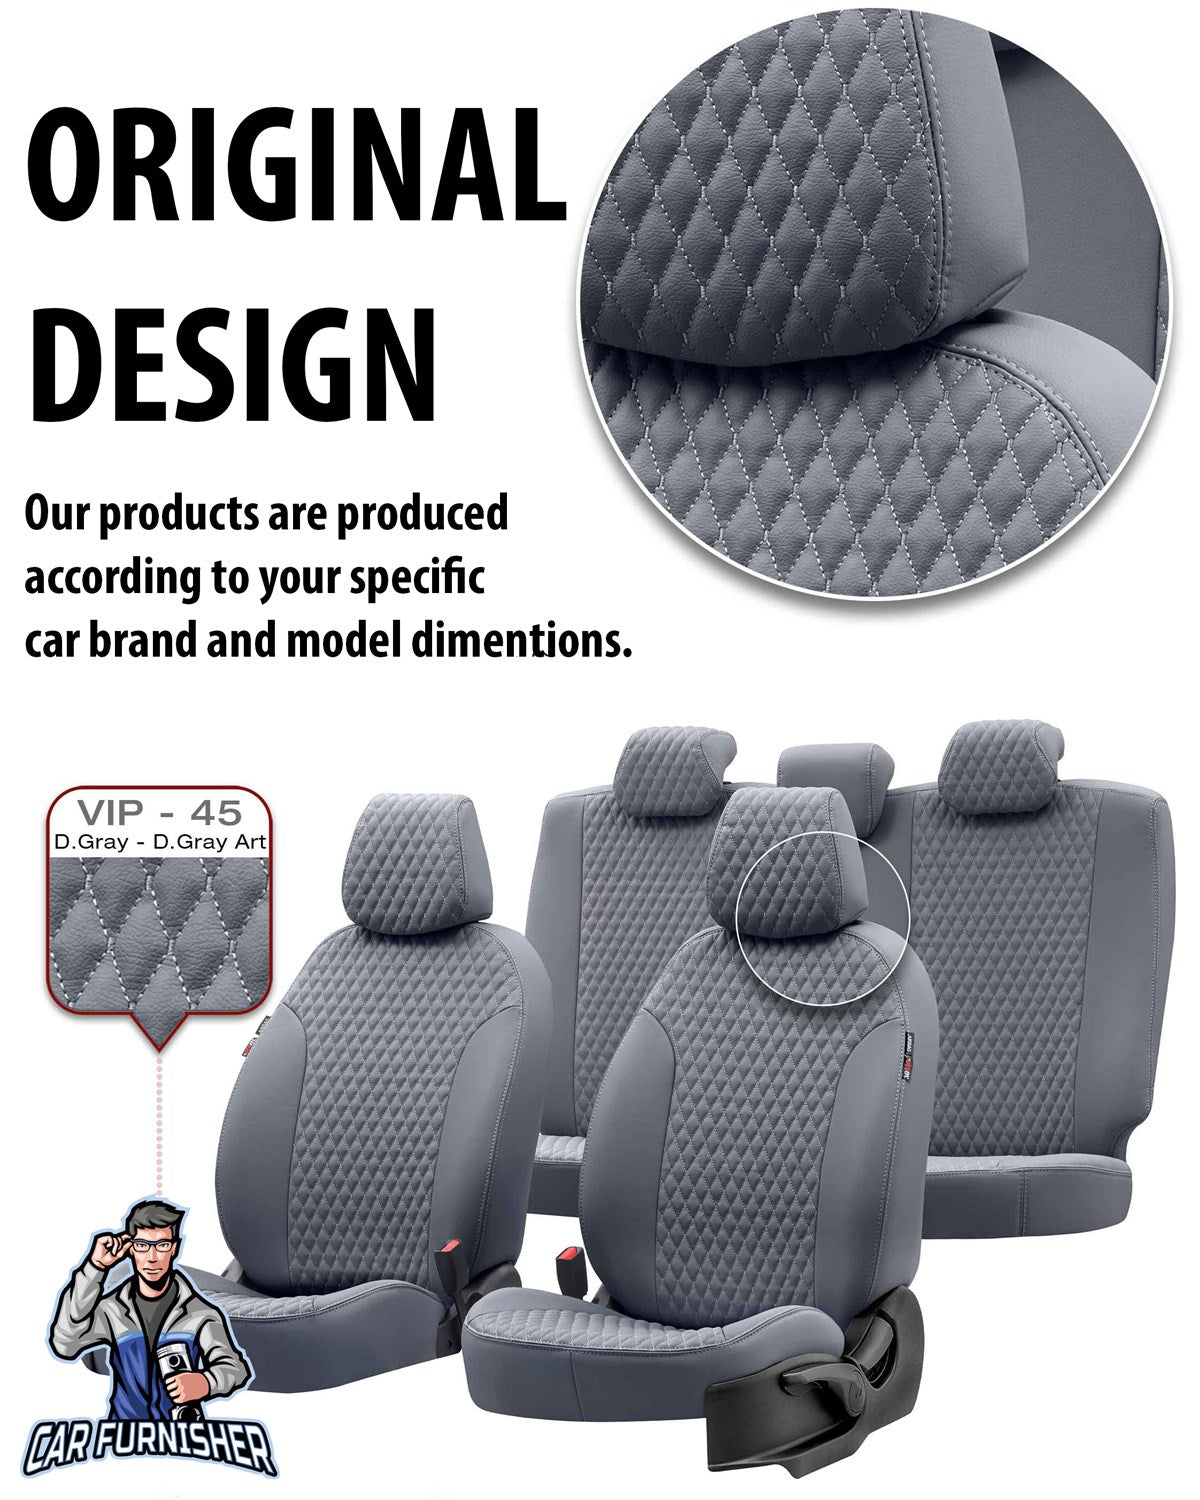 Volvo S40 Seat Cover Amsterdam Leather Design Black Leather